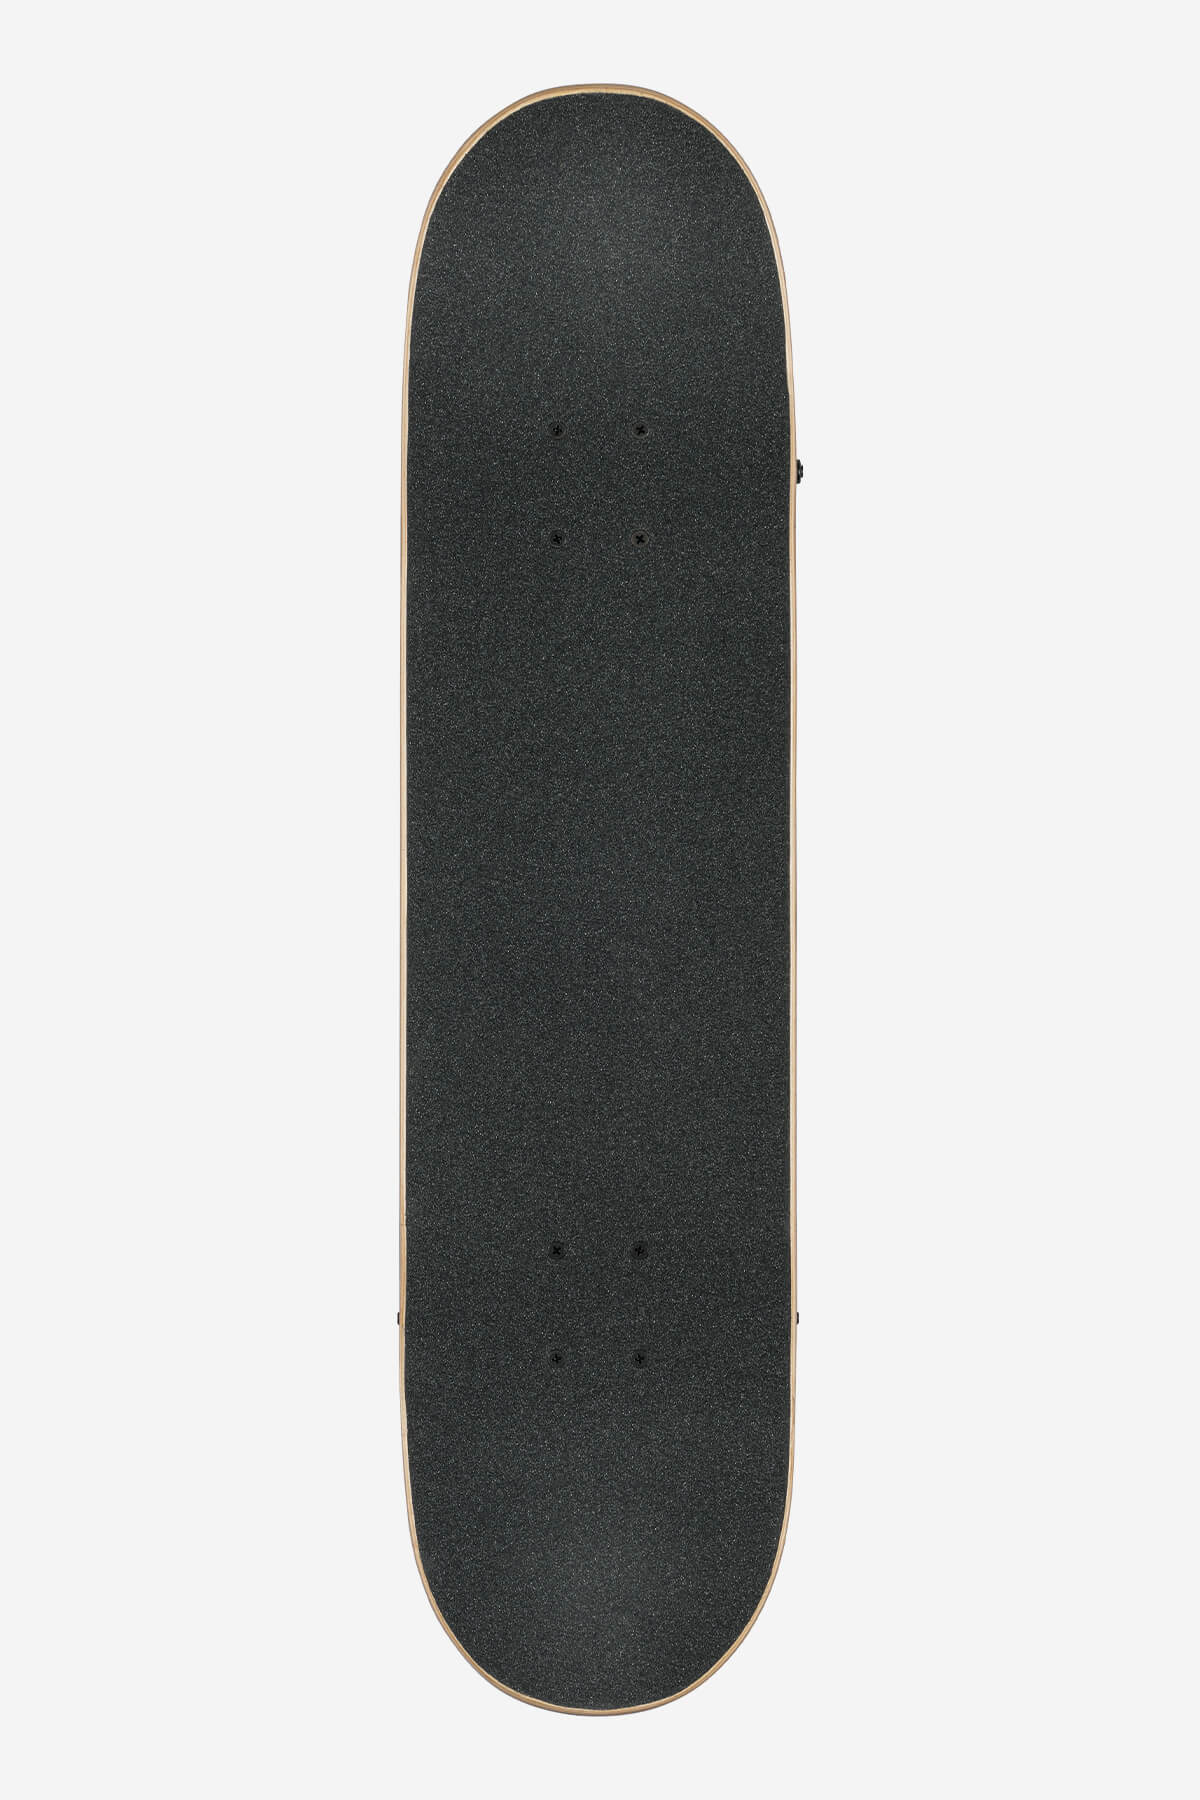 Globe - G1 Lineform - Black - 7.75" Complete Skateboard